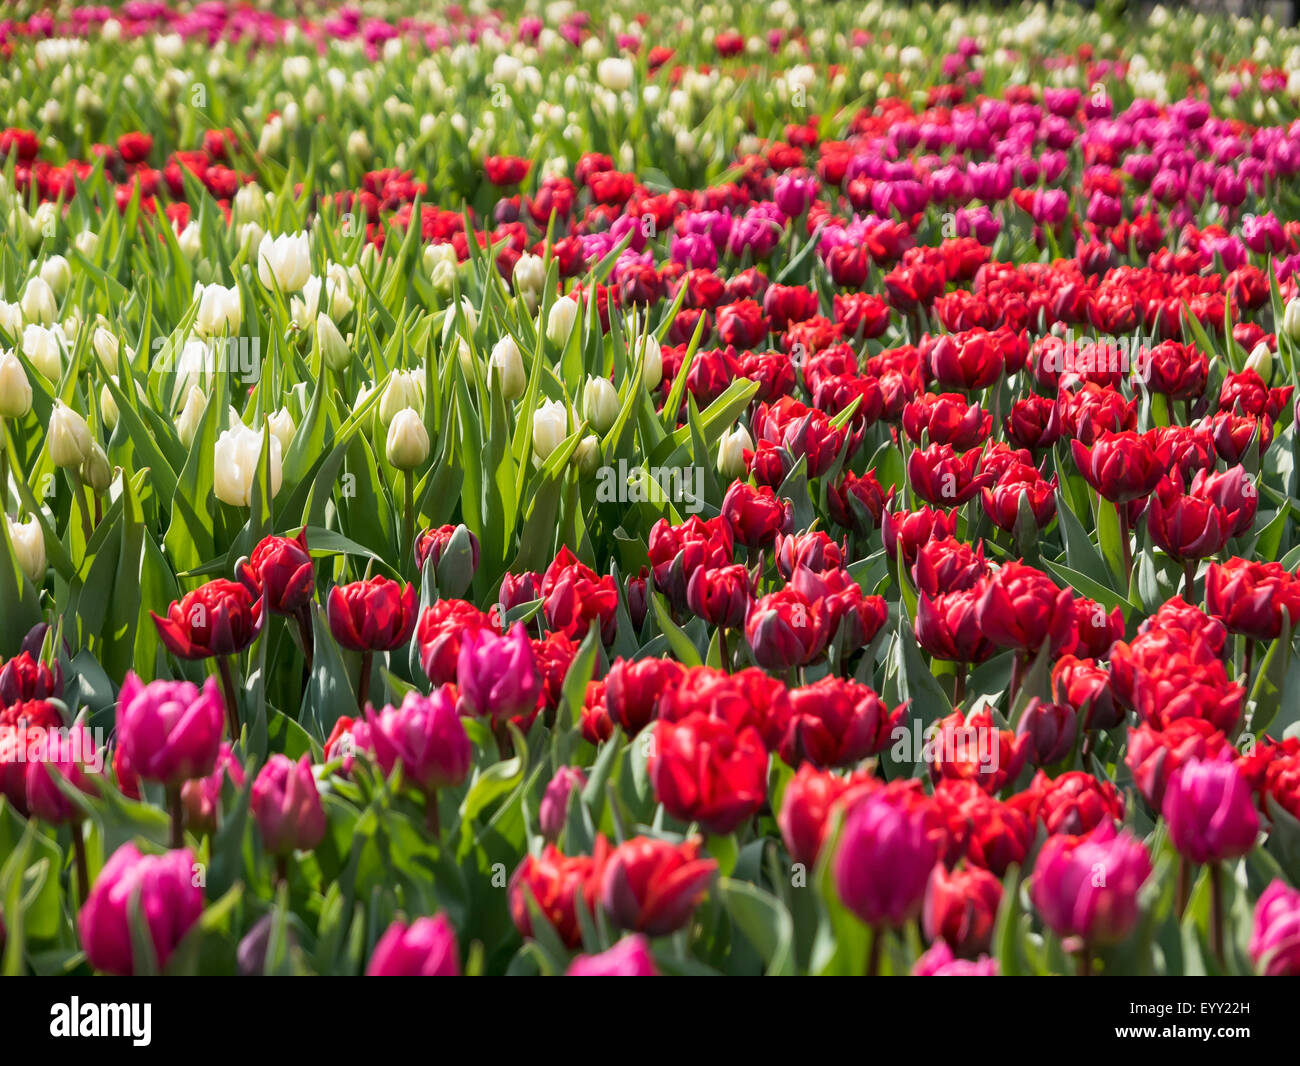 Tulips growing in crop field Stock Photo